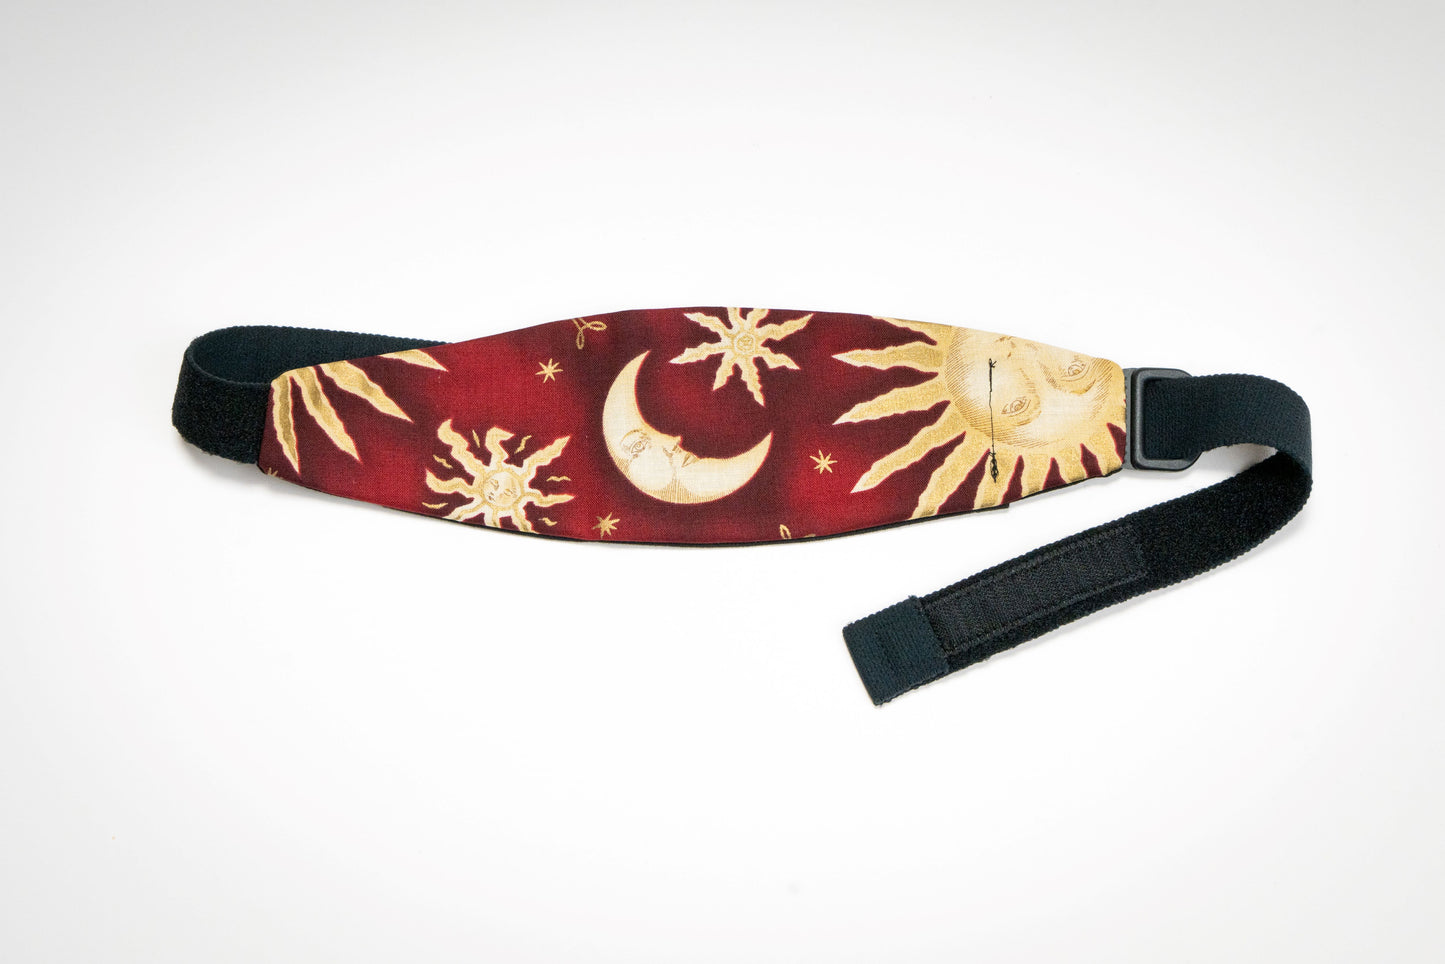 New Limited Edition Luna Tuck-away PD belt